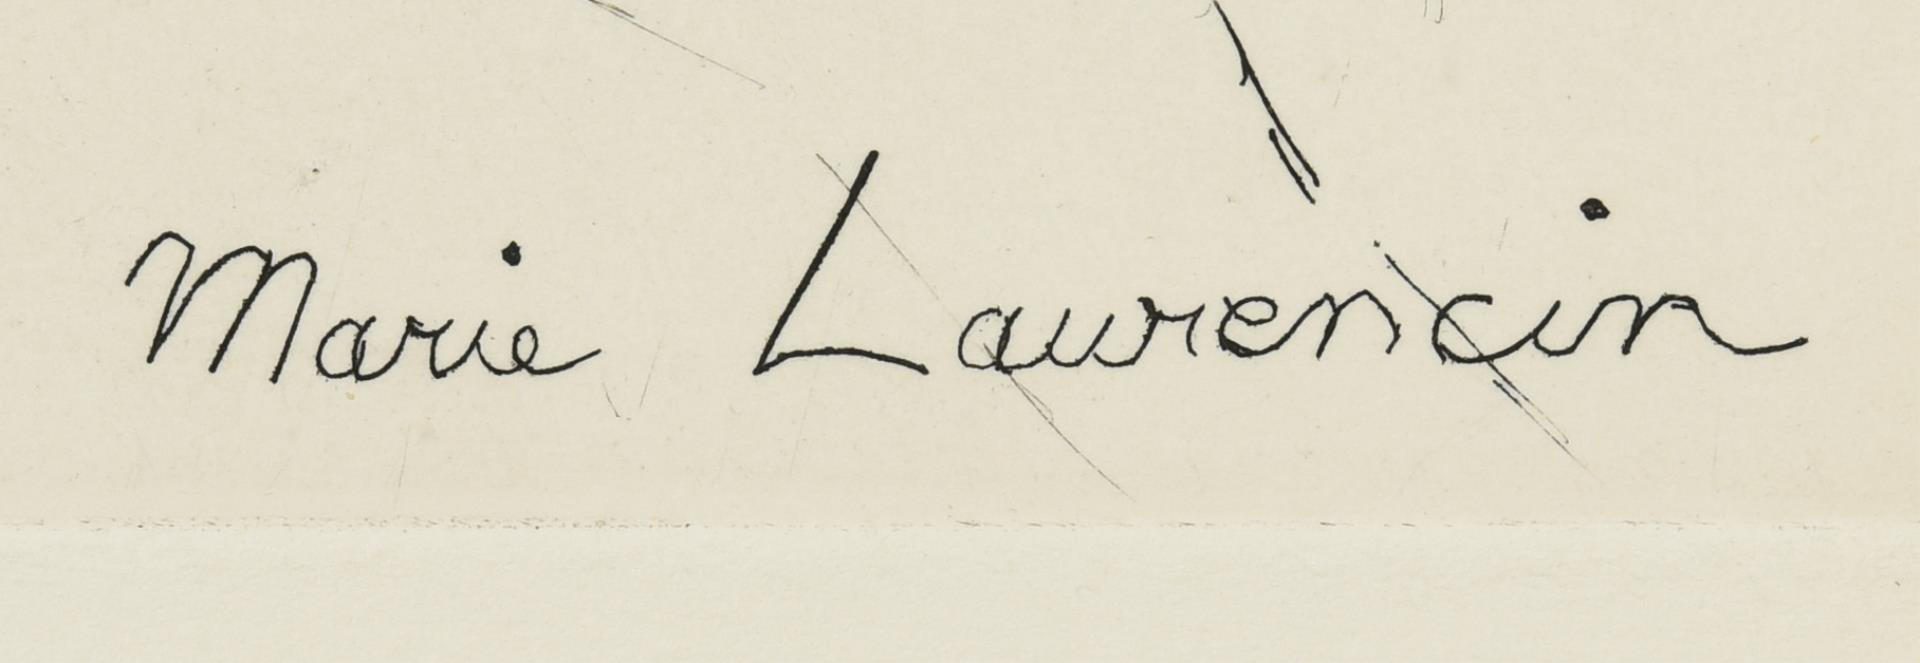 Lot 169: Three (3) prints, Vlaminck, Lepere, and Laurencin